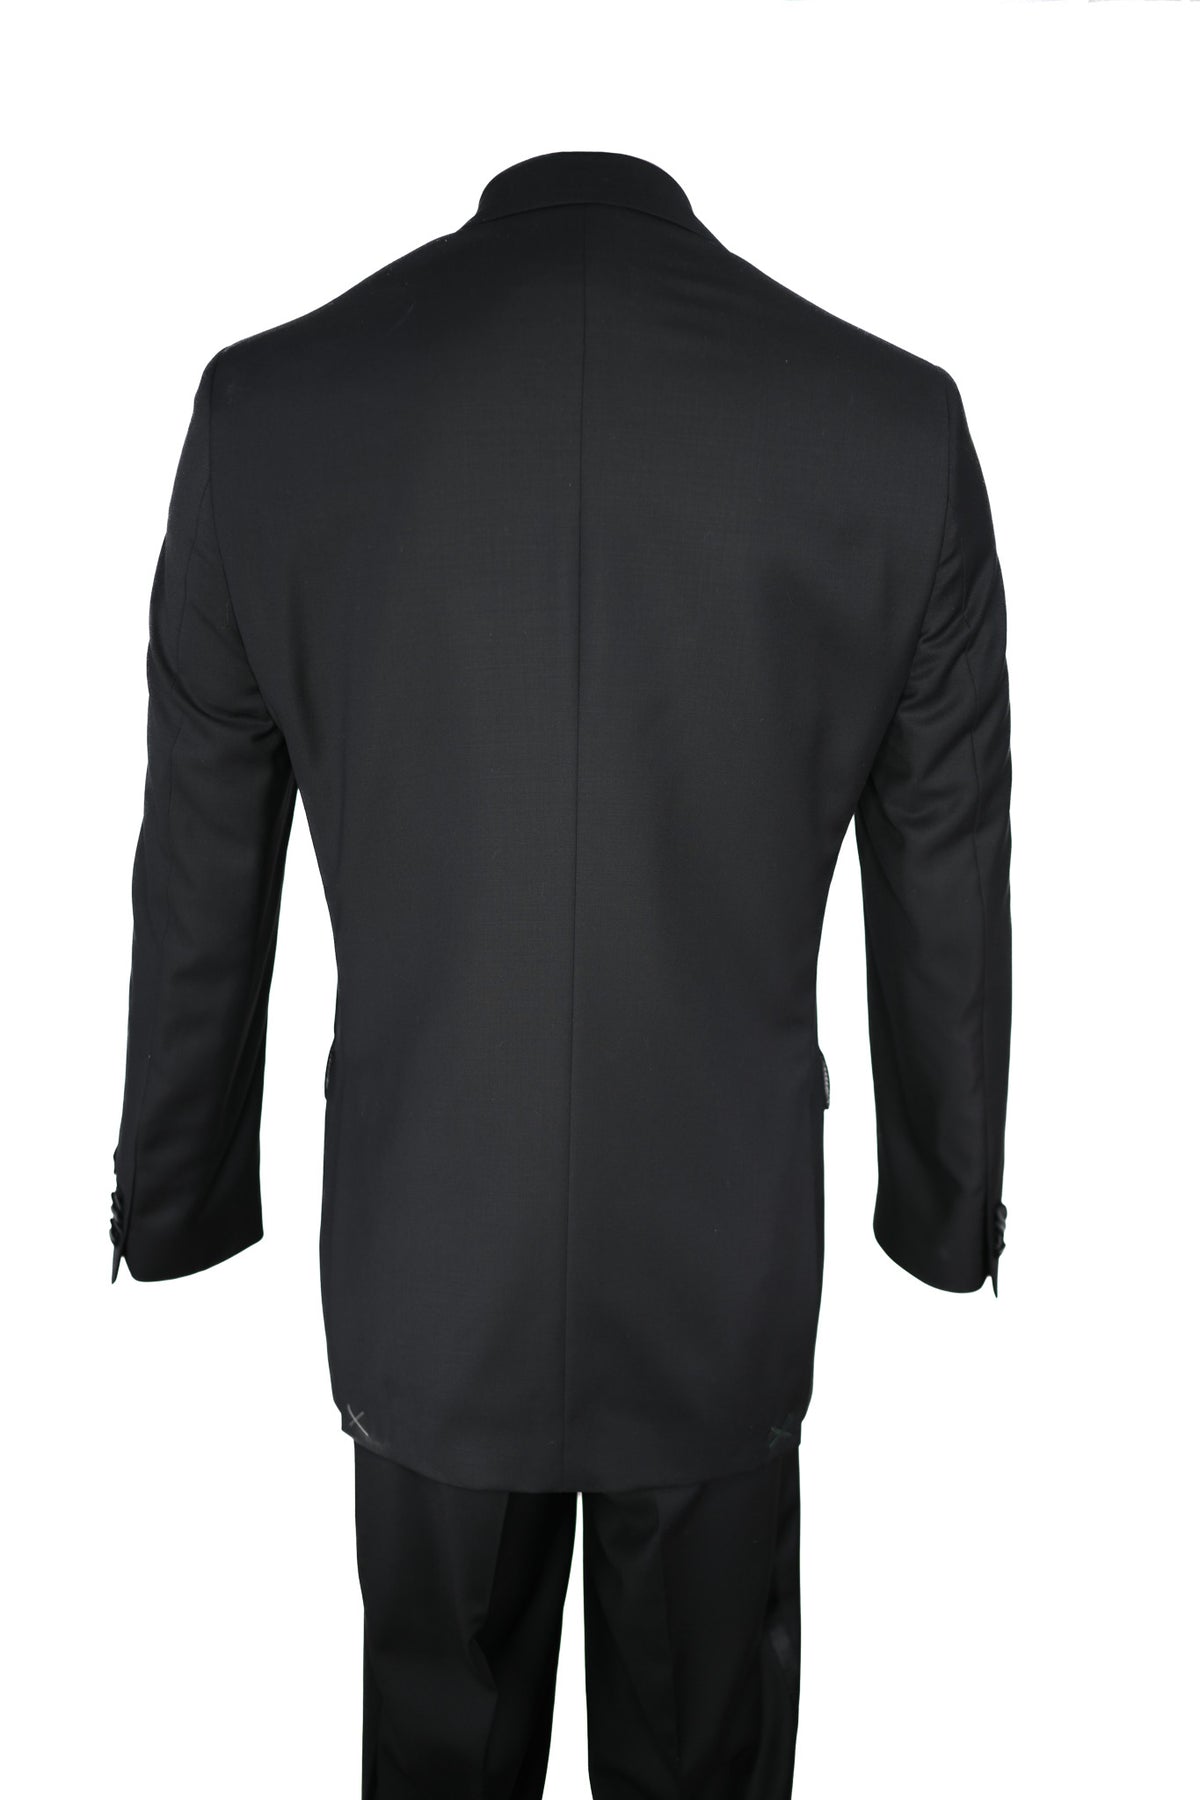 Paul Betenly Tuxedo Black – Ticknors Men's Clothiers